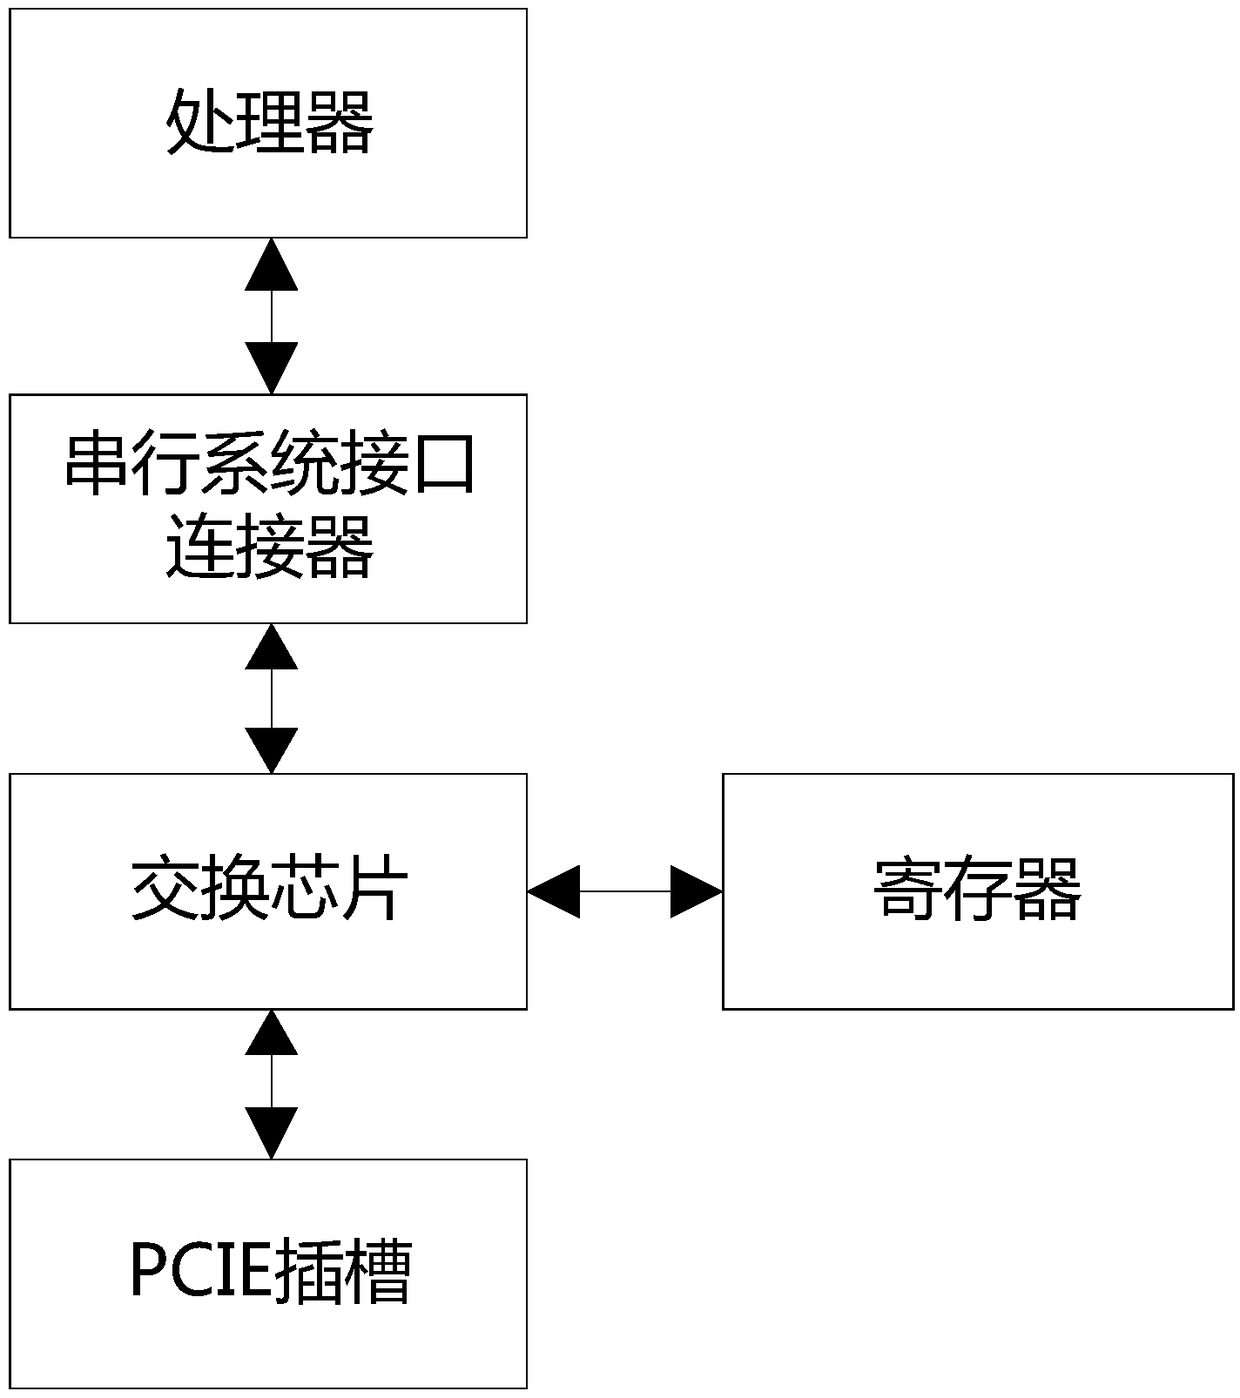 PCIE expansion device